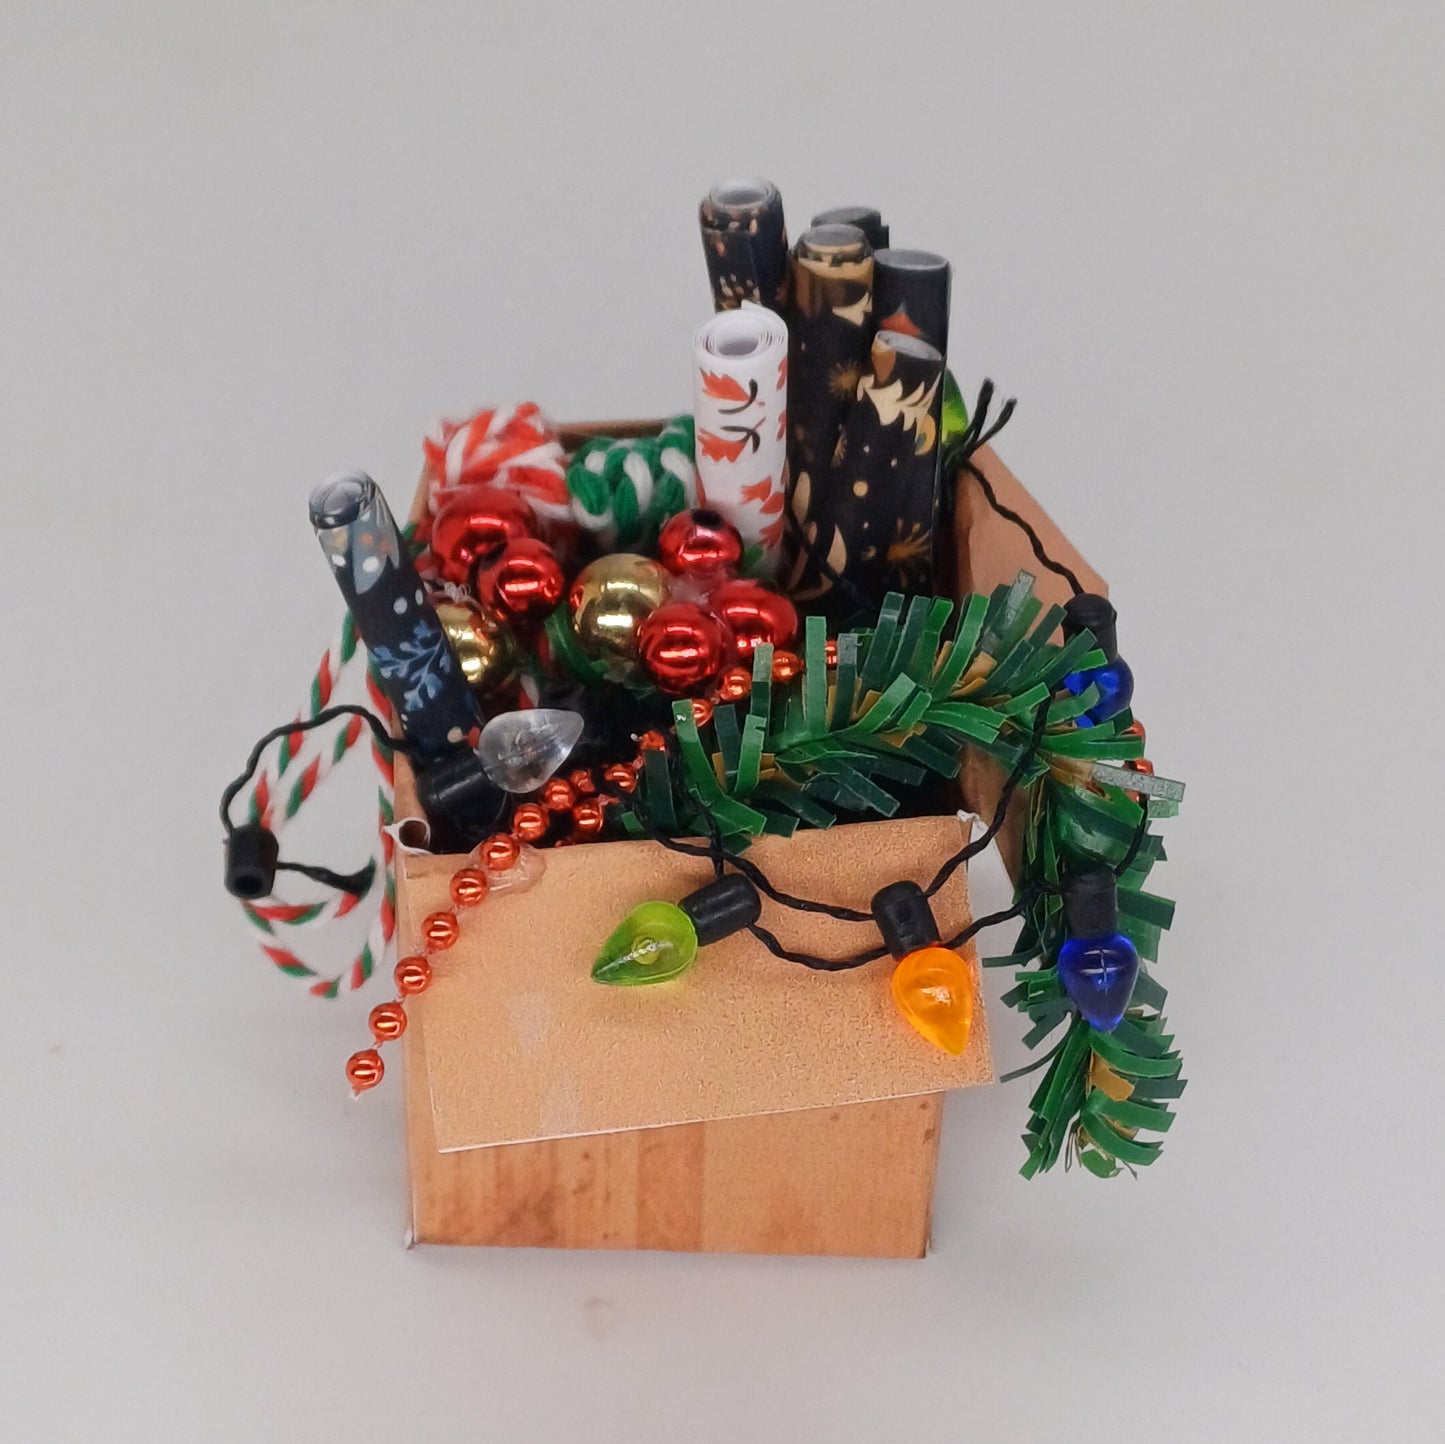 1:12 scale miniature Christmas cardboard kit